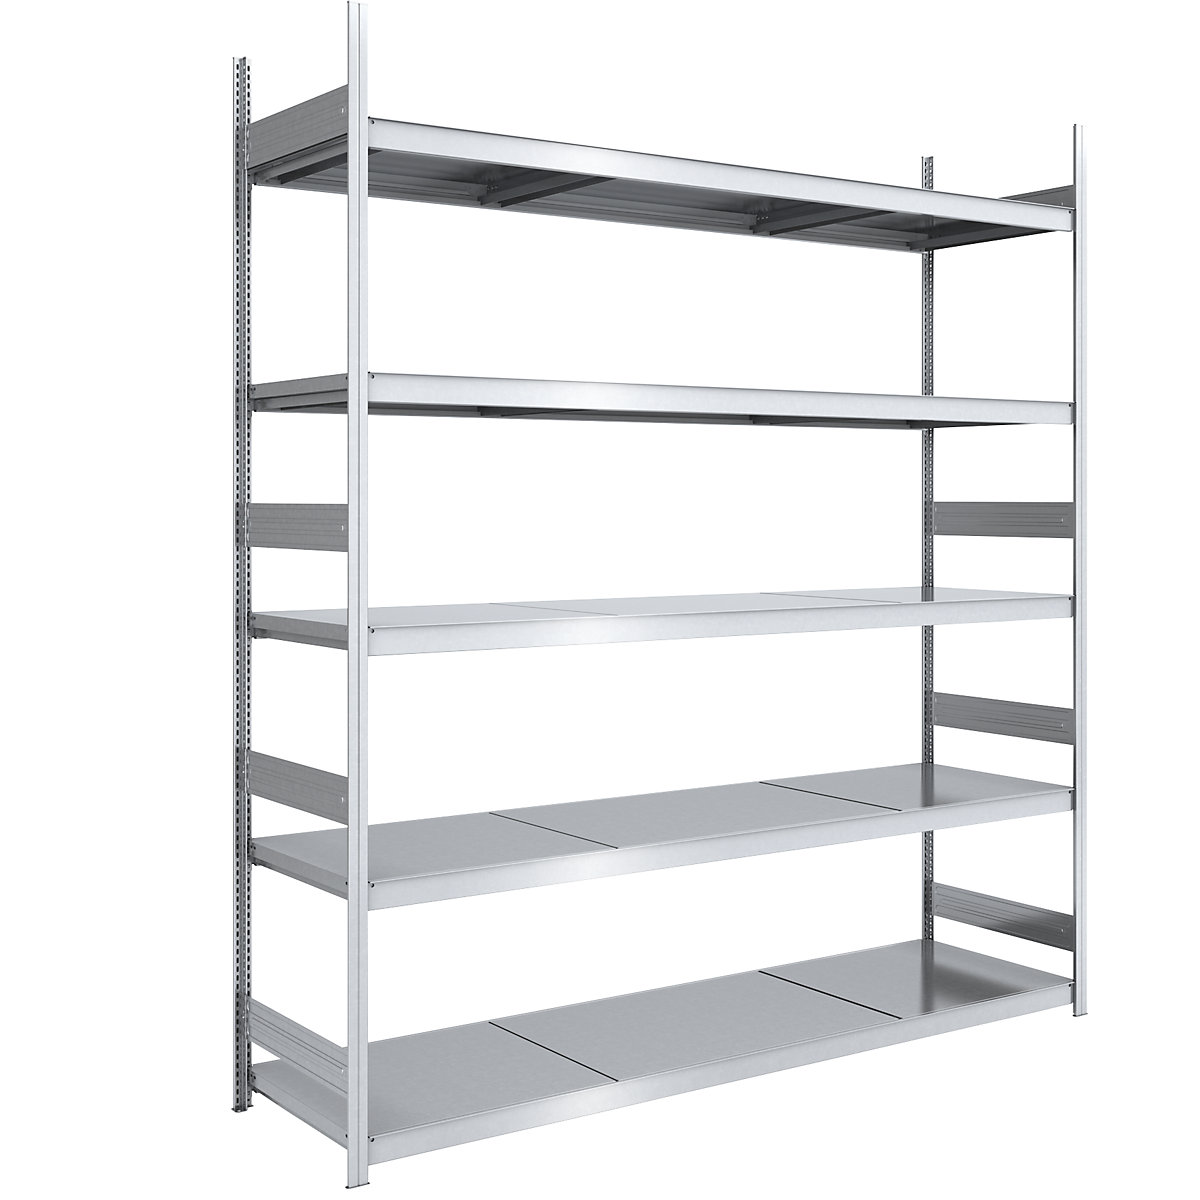 Wide span boltless shelving unit with steel shelves – hofe, height 3000 mm, shelf width 2500 mm, shelf depth 800 mm, standard shelf unit